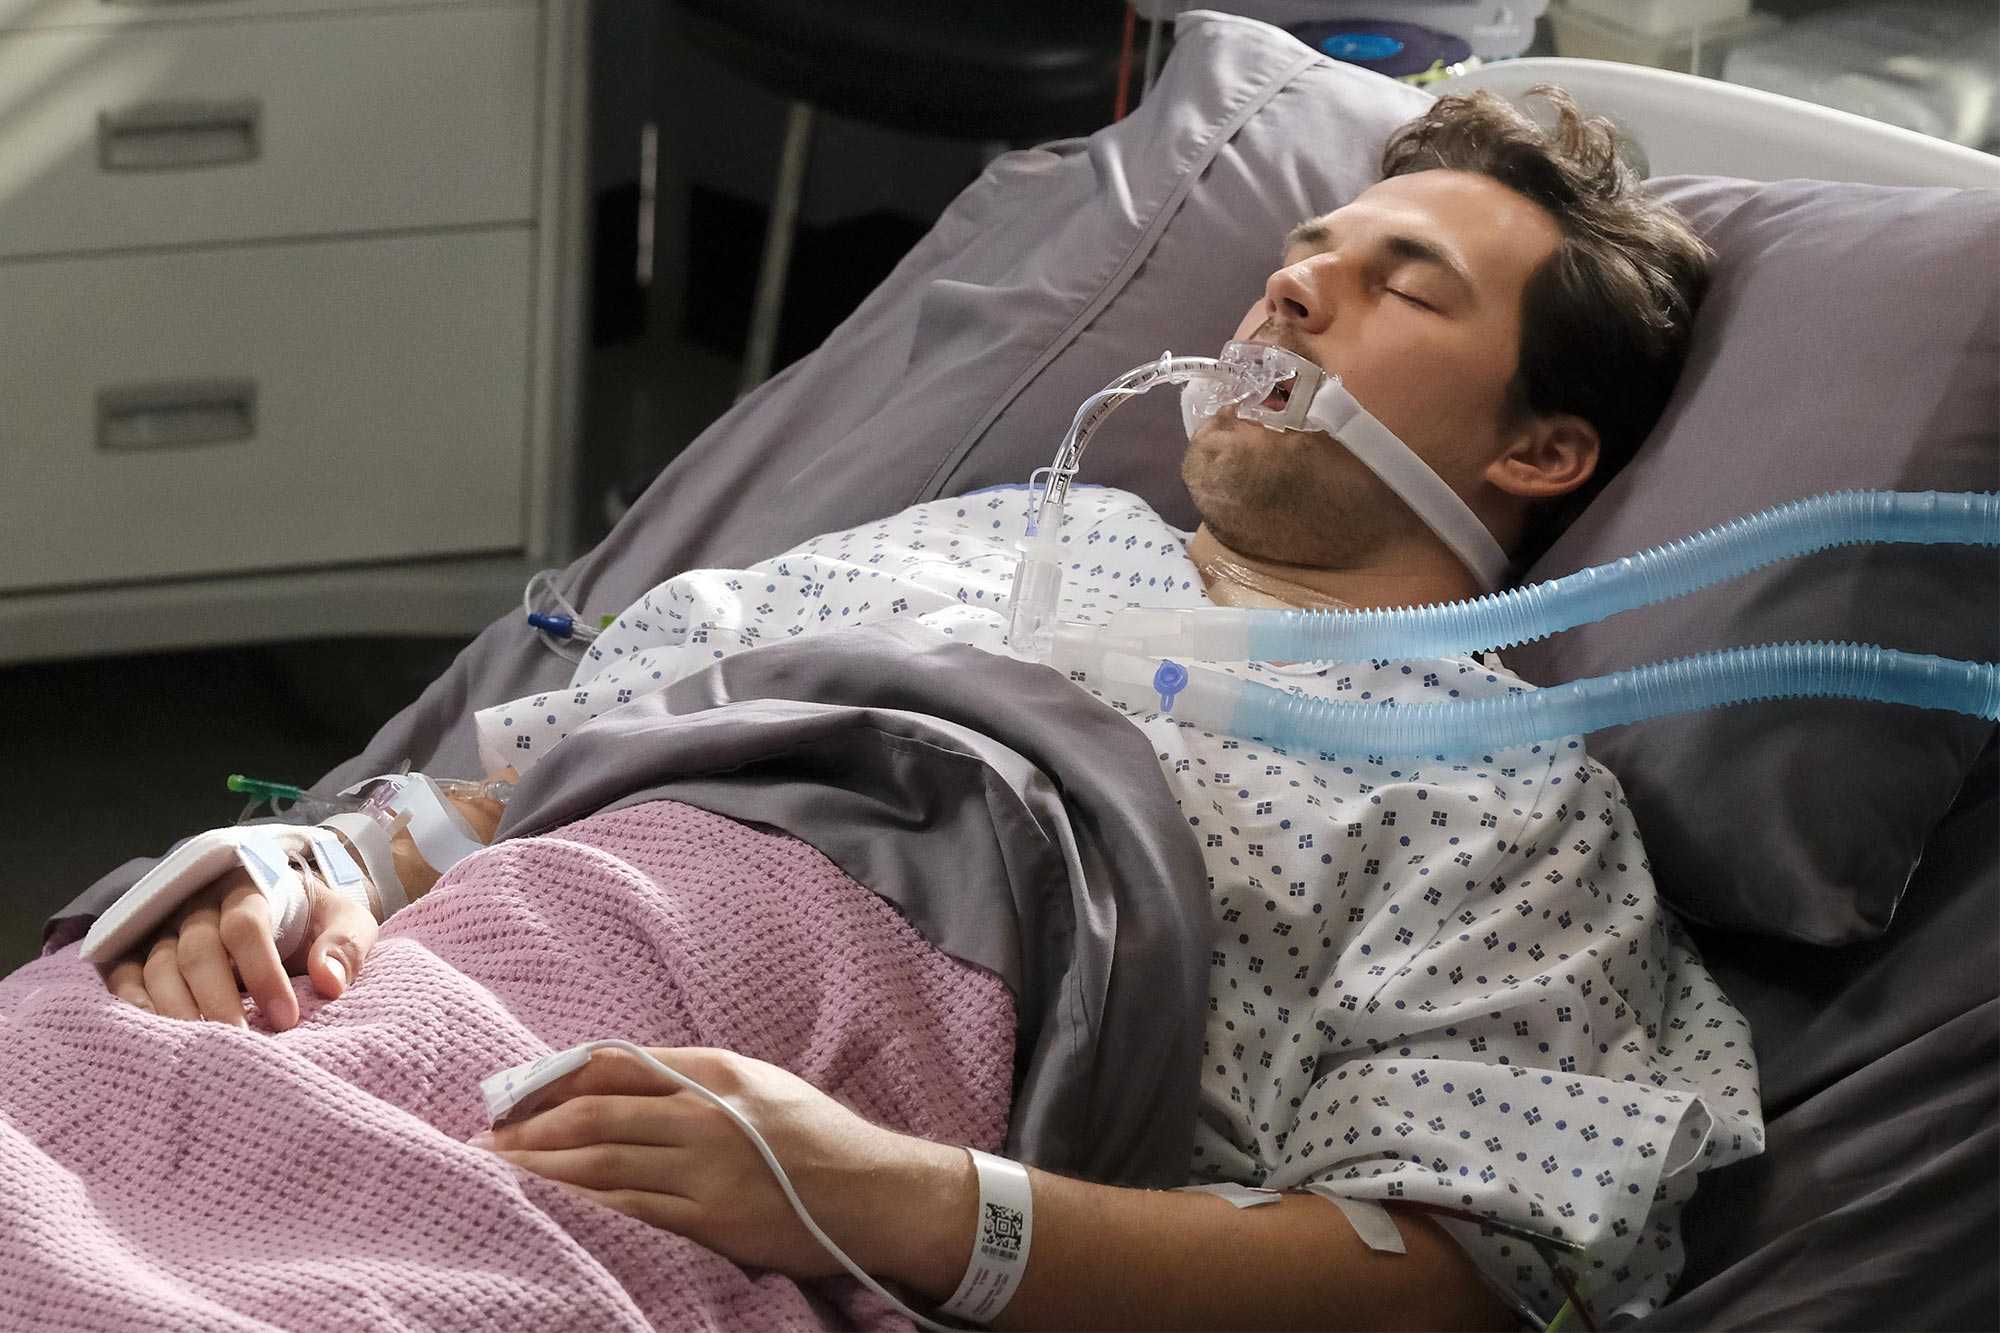 DeLuca died in Grey's Anatomy